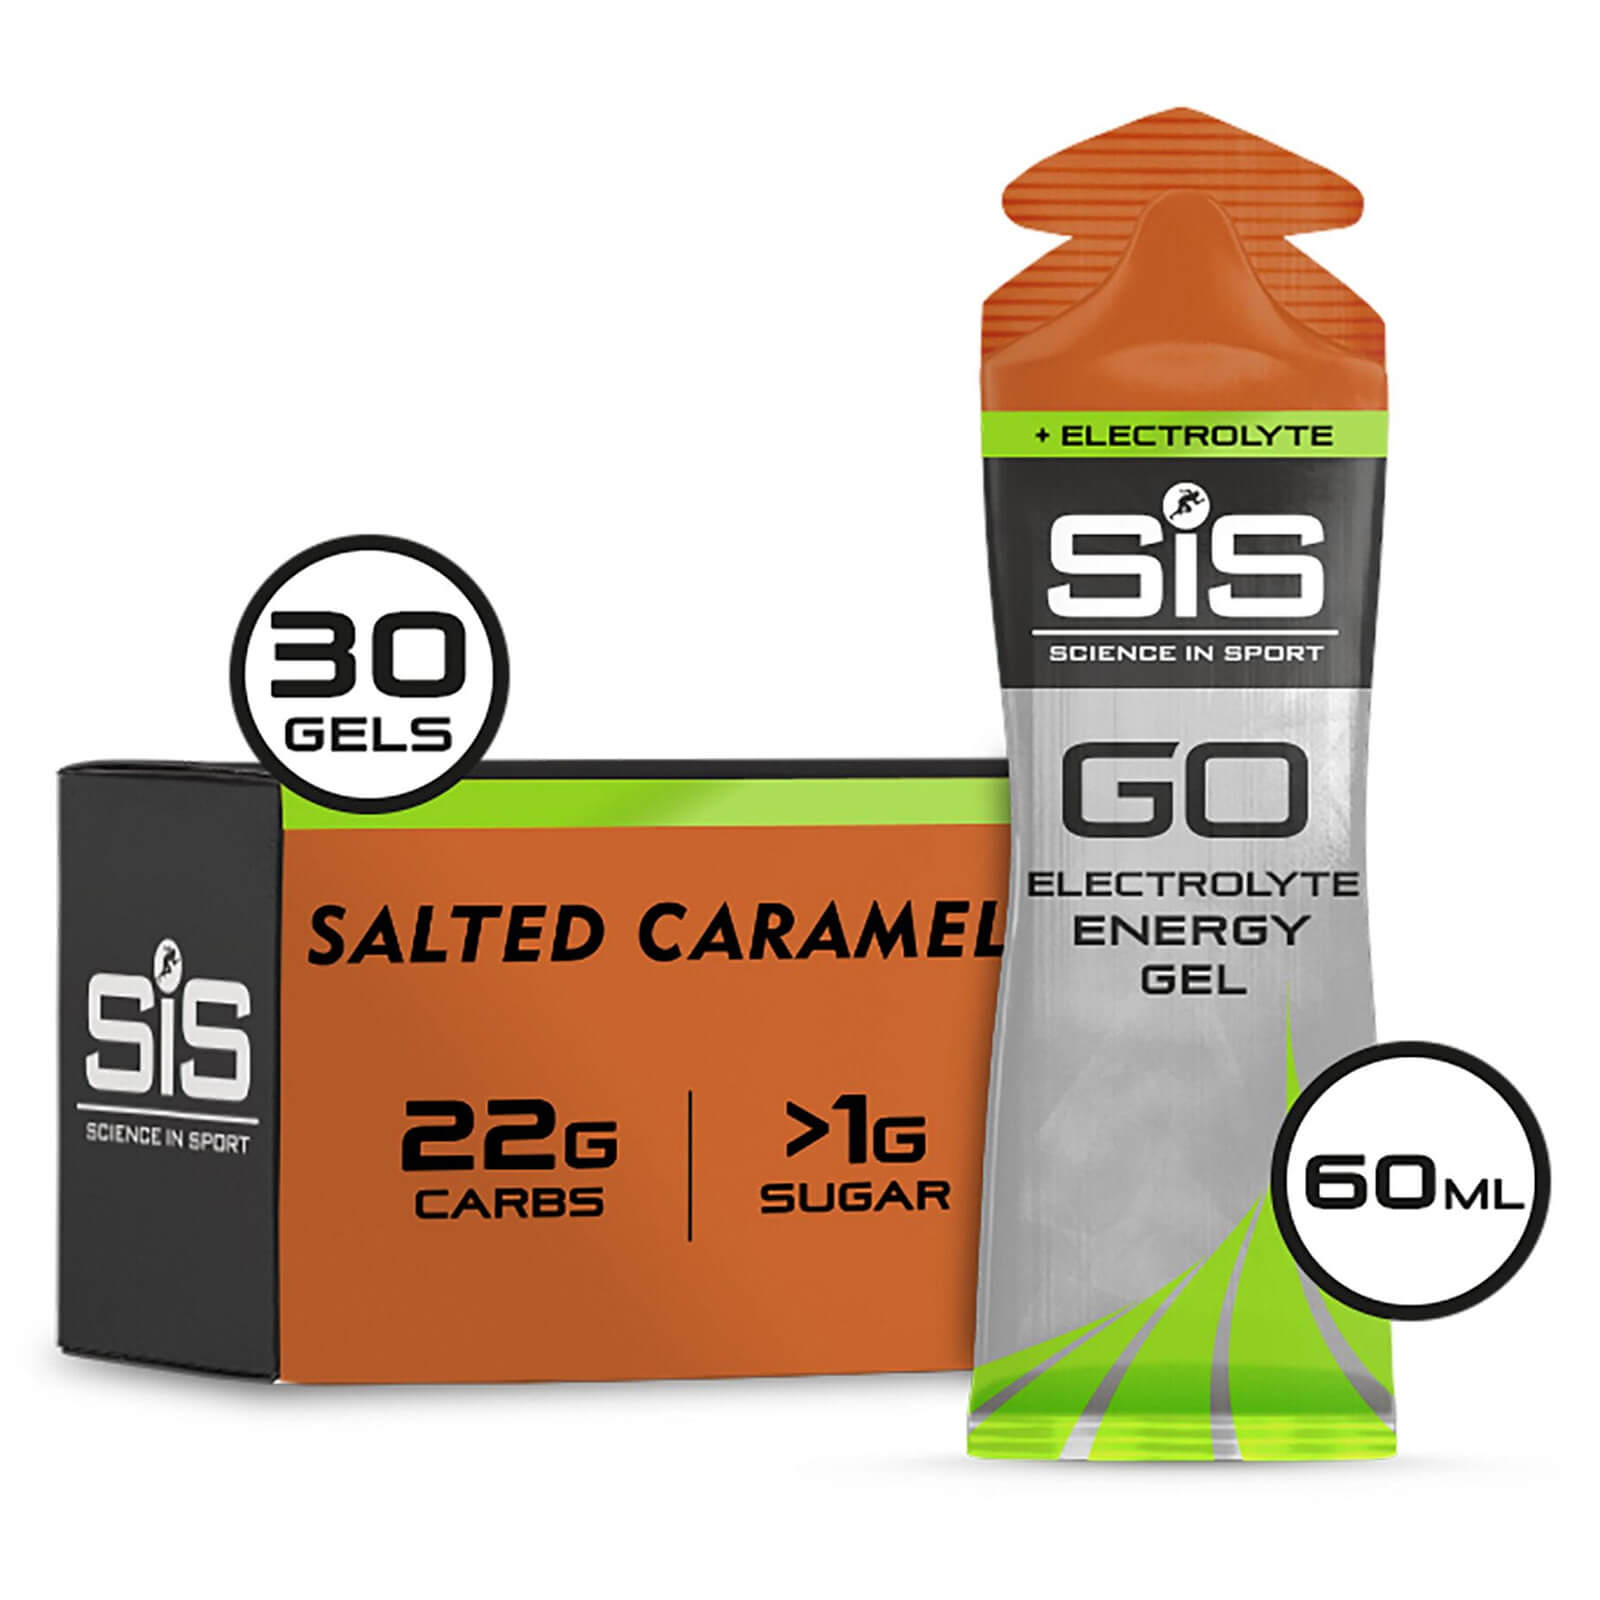 Science in Sport GO Energy + Electrolyte Gel Box of 30 - 30Sachets - Gels - Salted Caramel